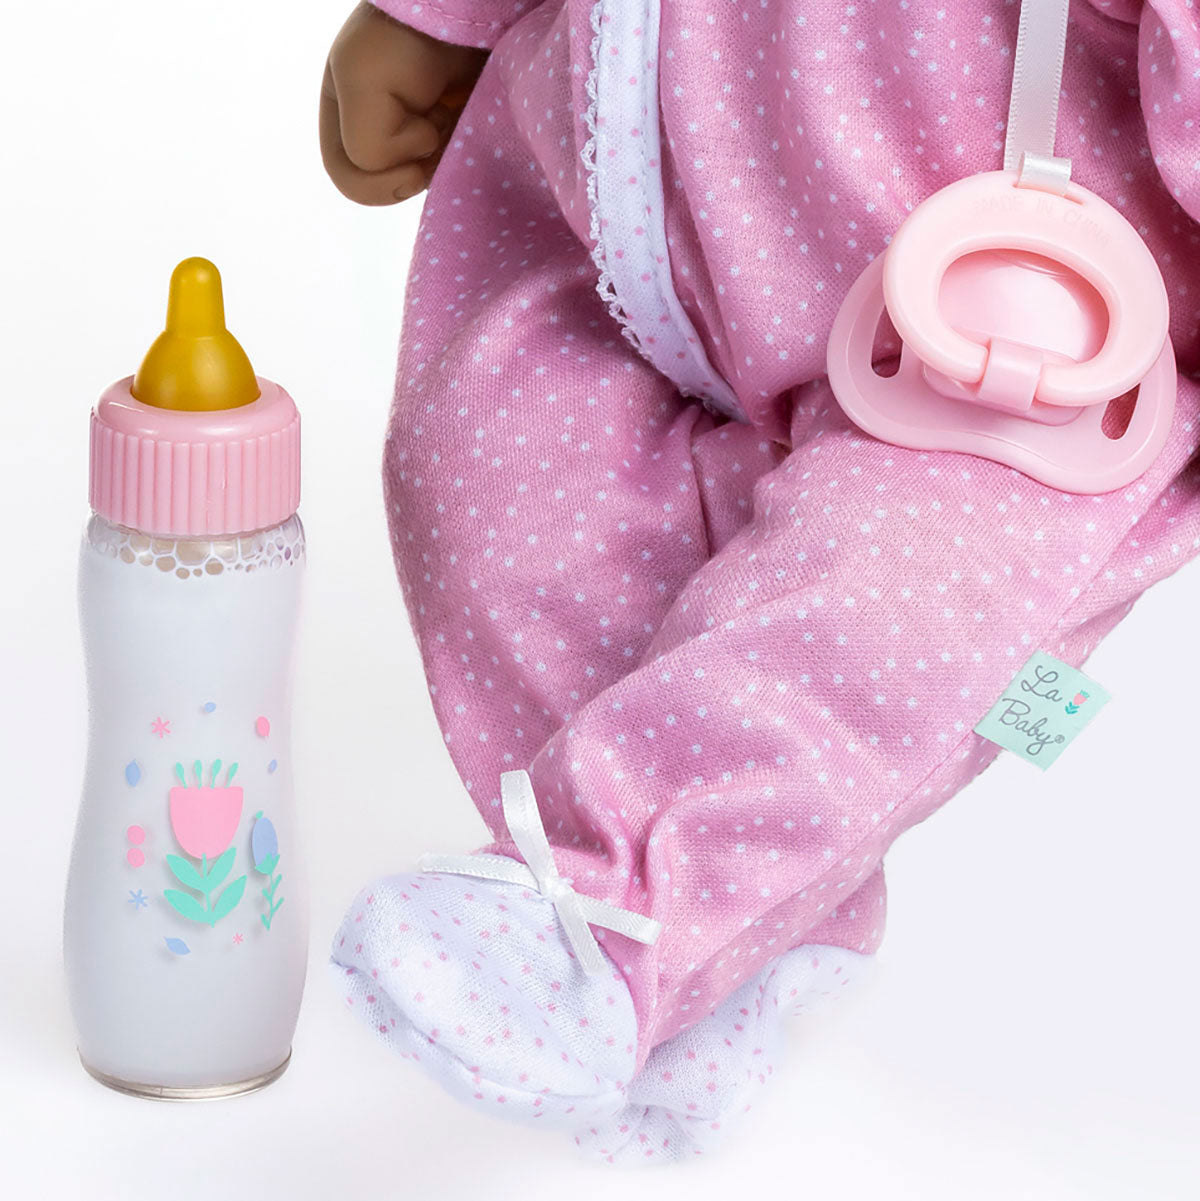 Hispanic La Baby doll 40 cm to sleep with pajamas, pacifier and bottle